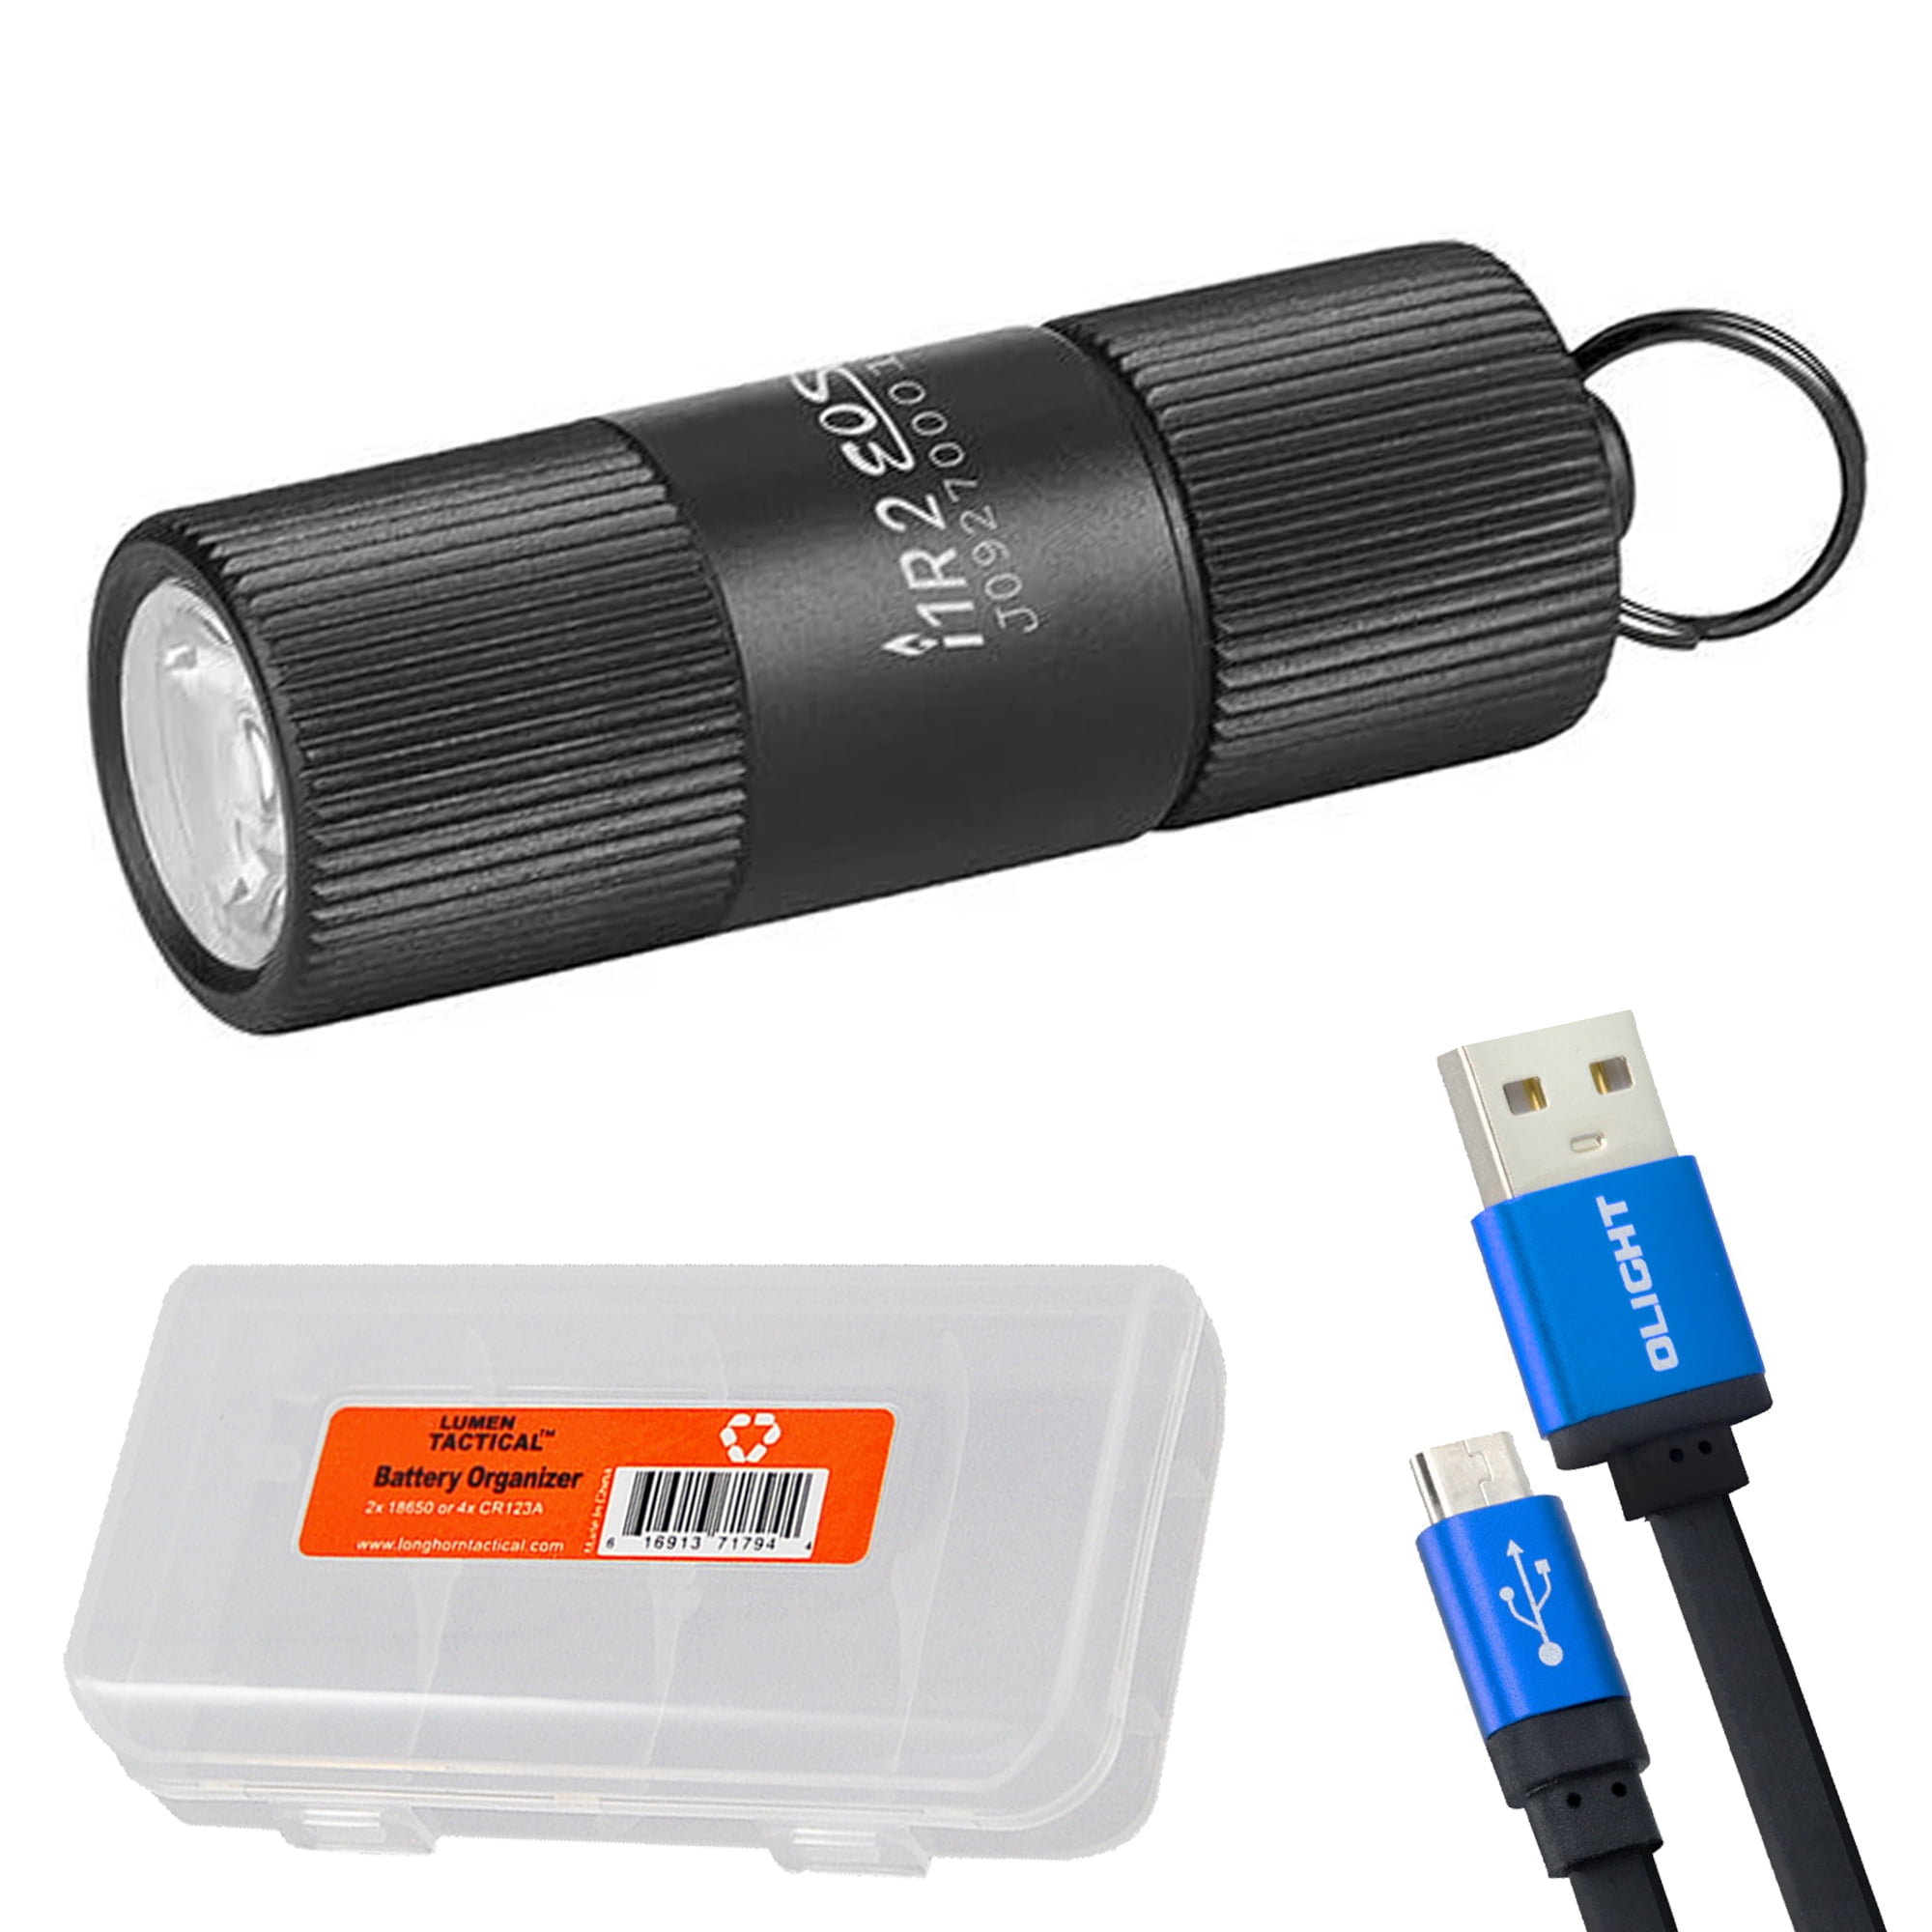 OLIGHT I1R 2 Eos 150 Lumens USB Rechargeable Tiny Keychain Pocket Flashlight 